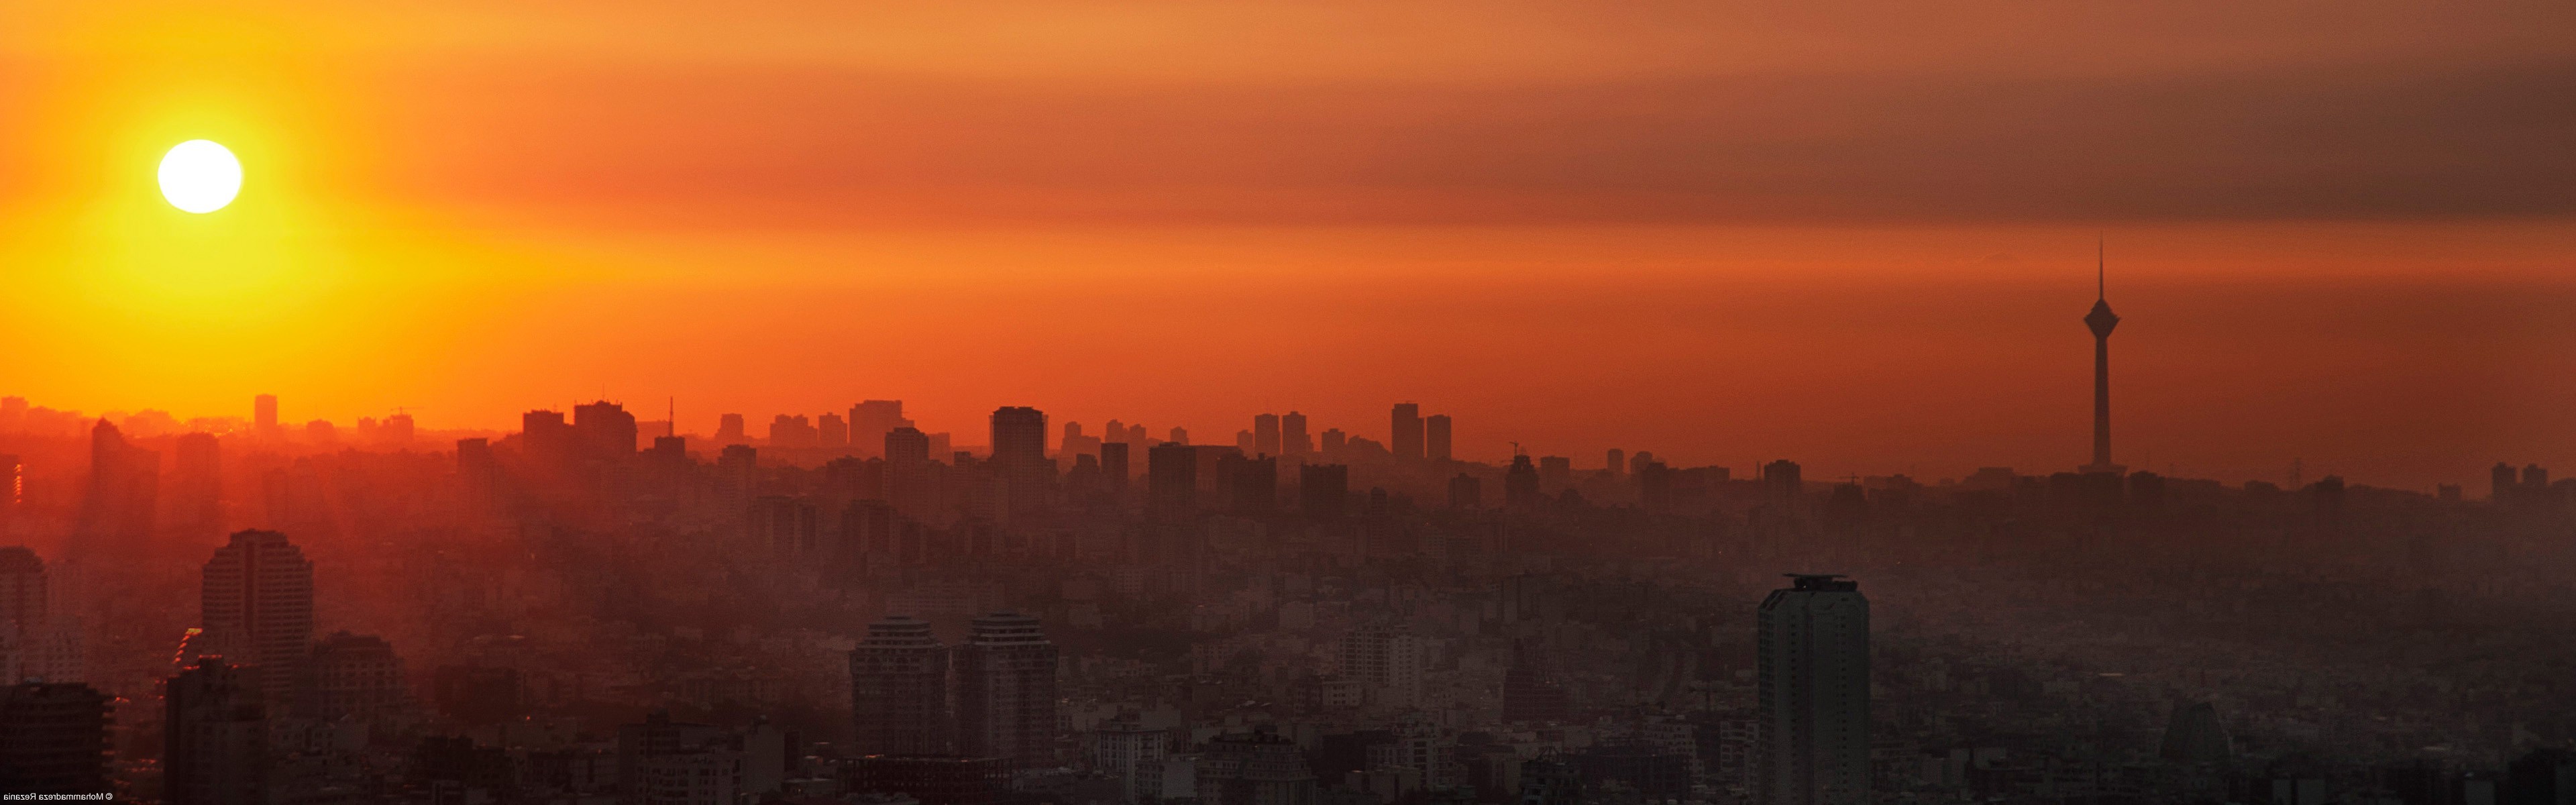 Iran, Tehran, City, Milad Tower, Tower, Sunset Wallpaper